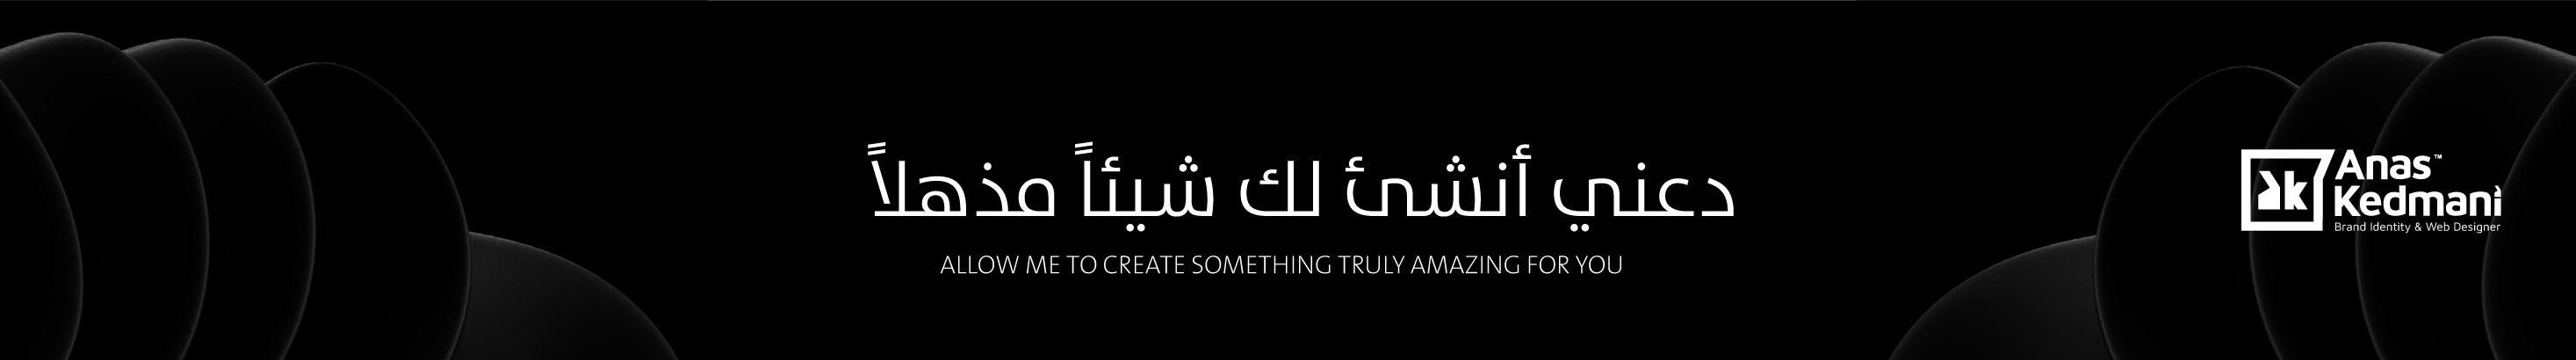 Anas Kedmani ™'s profile banner